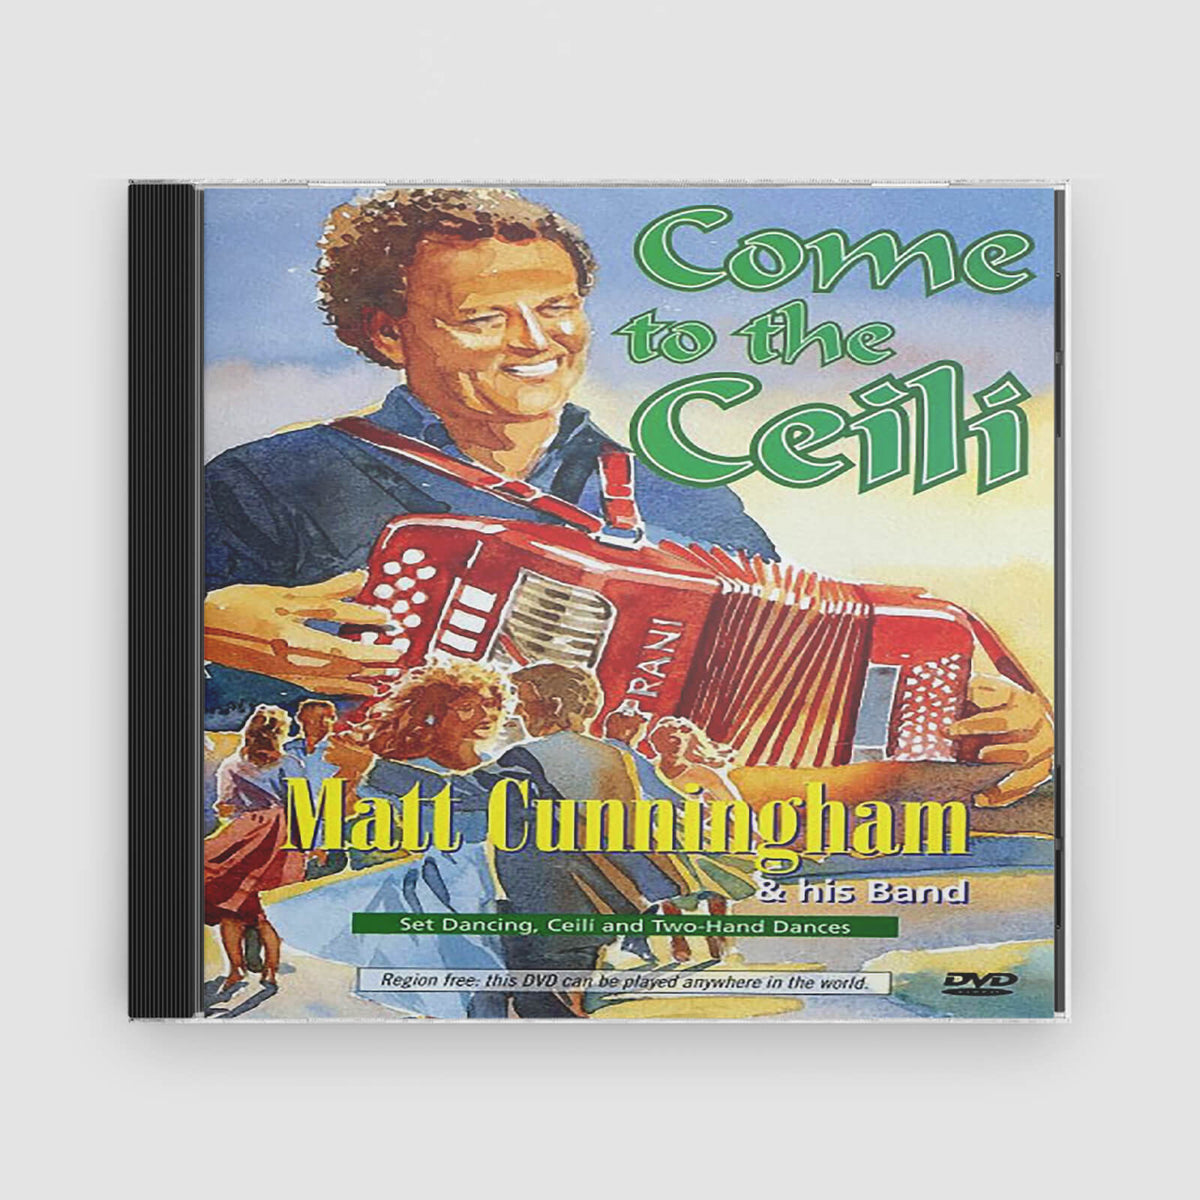 Matt Cunningham : Come to the Ceili (DVD)